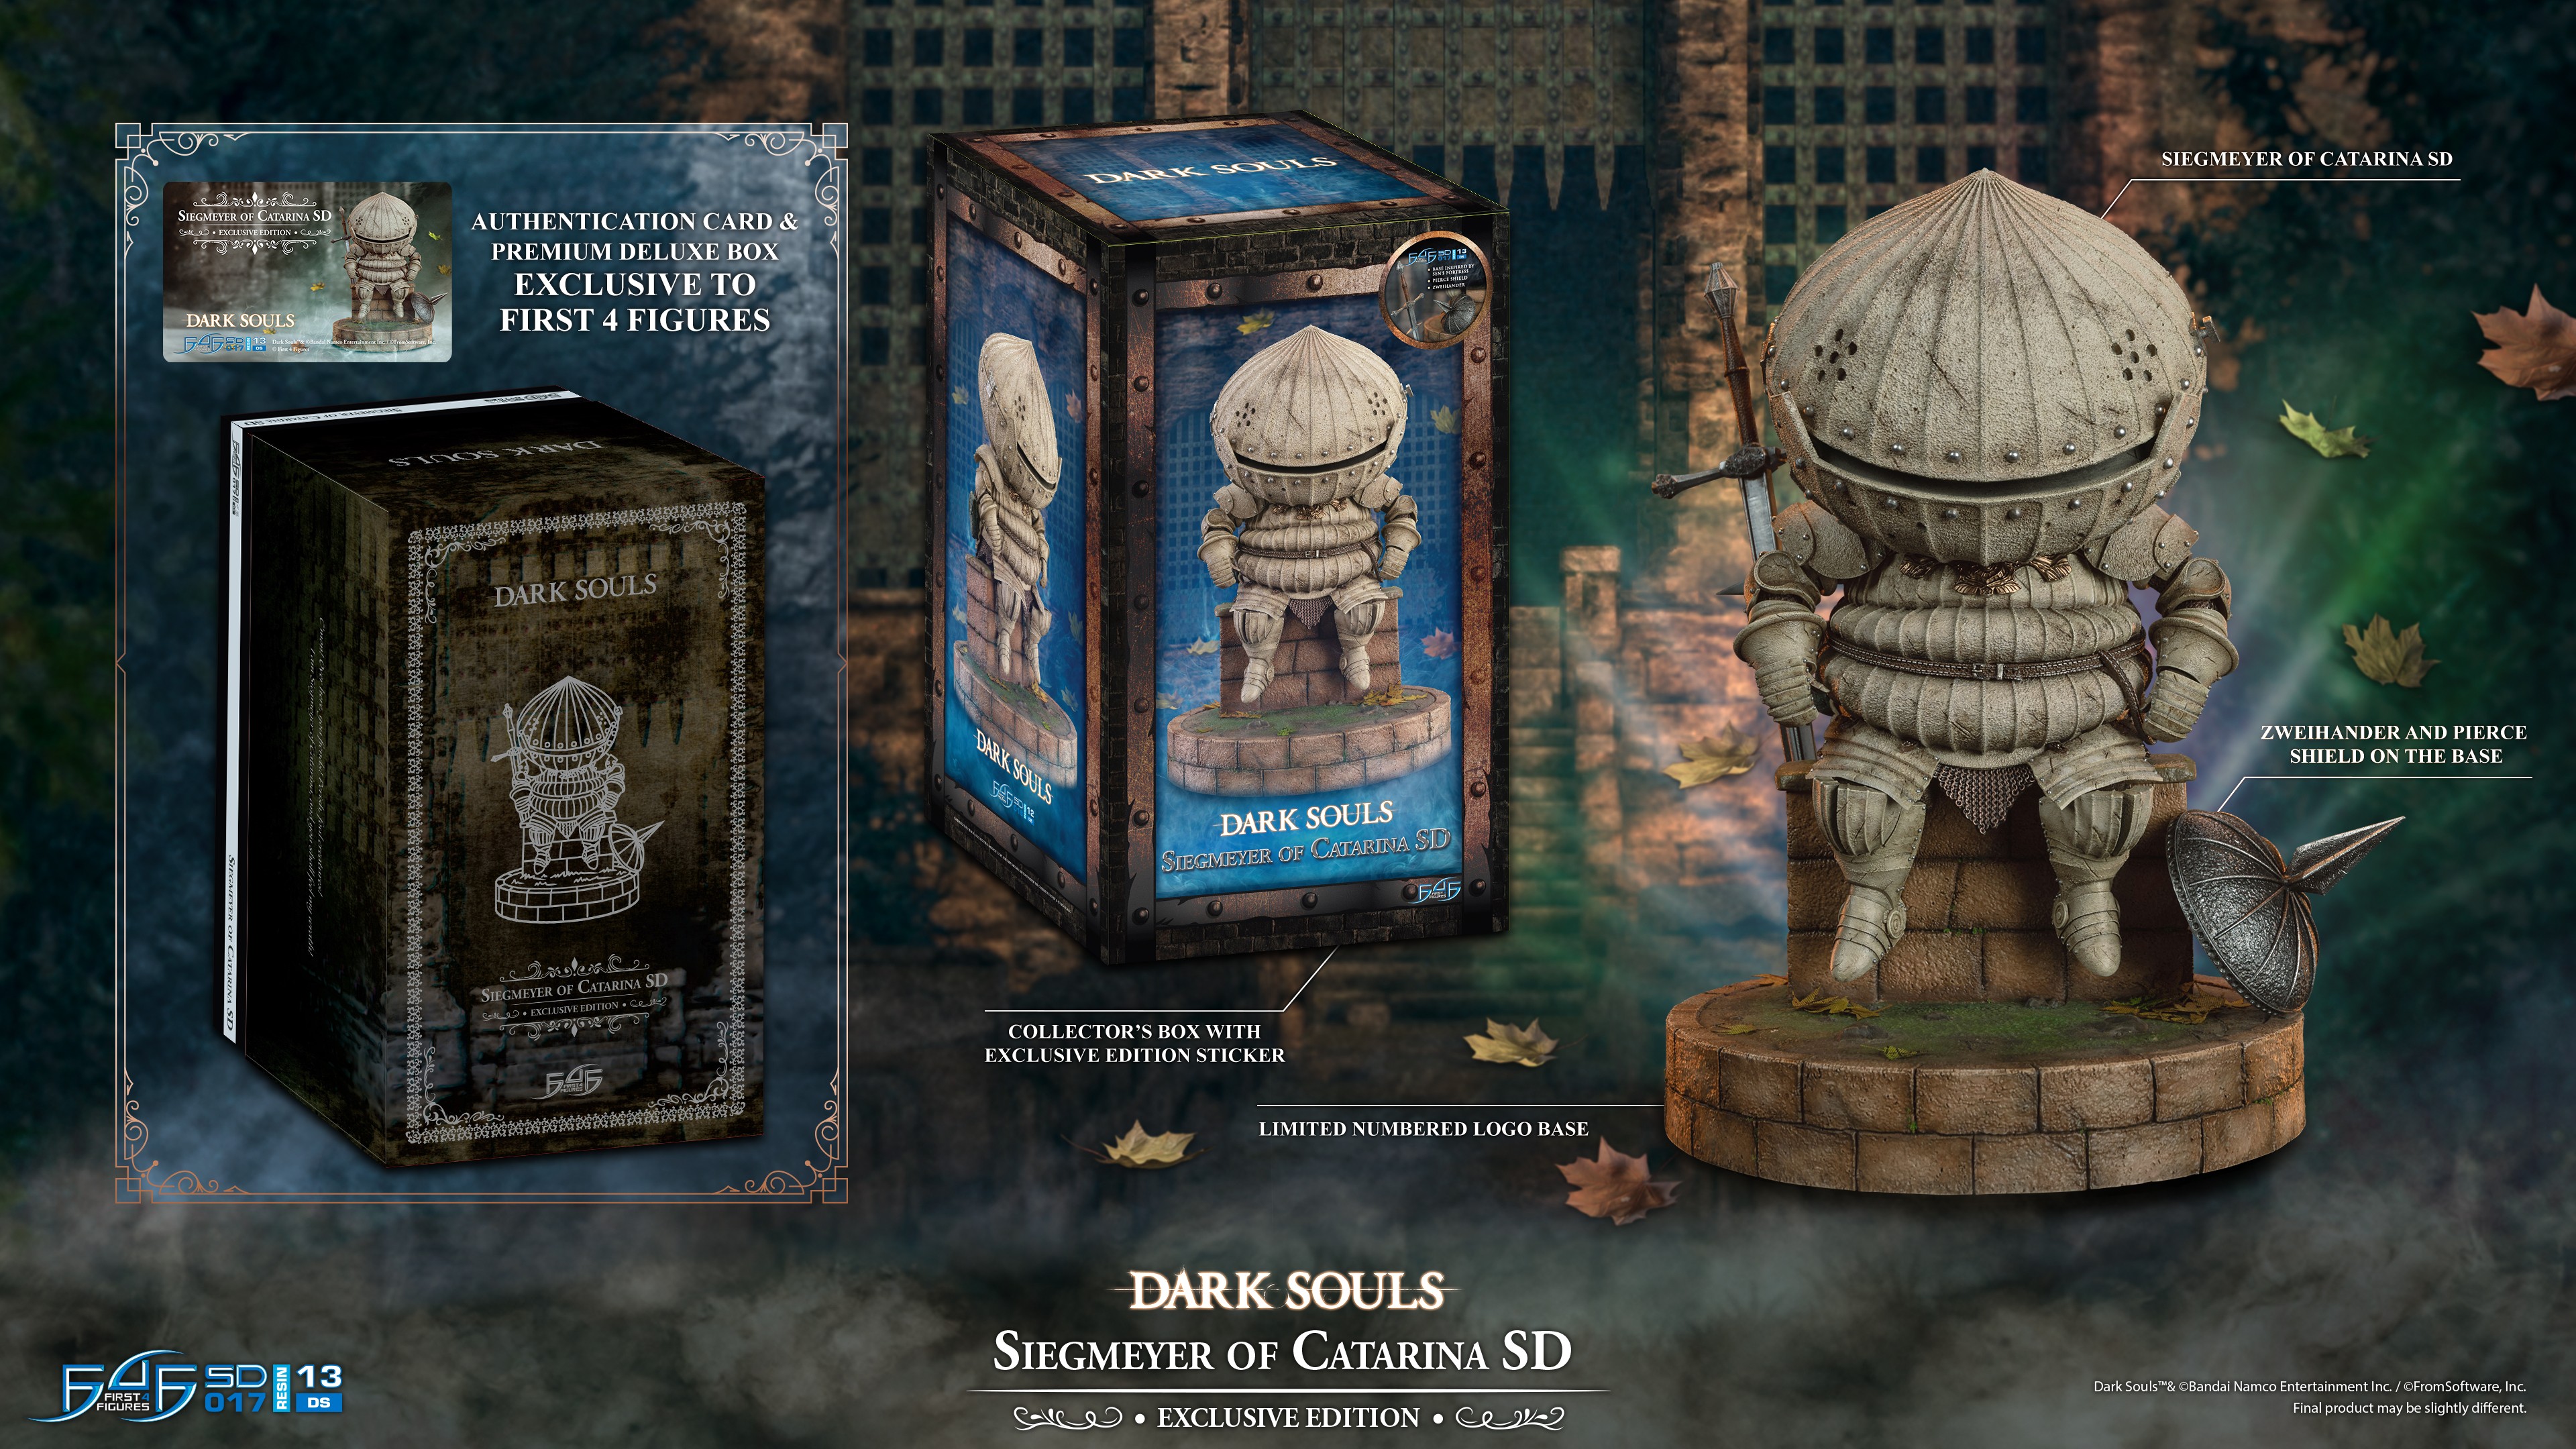 Dark Souls - Siegmeyer of Catarina SD (Exclusive Edition)